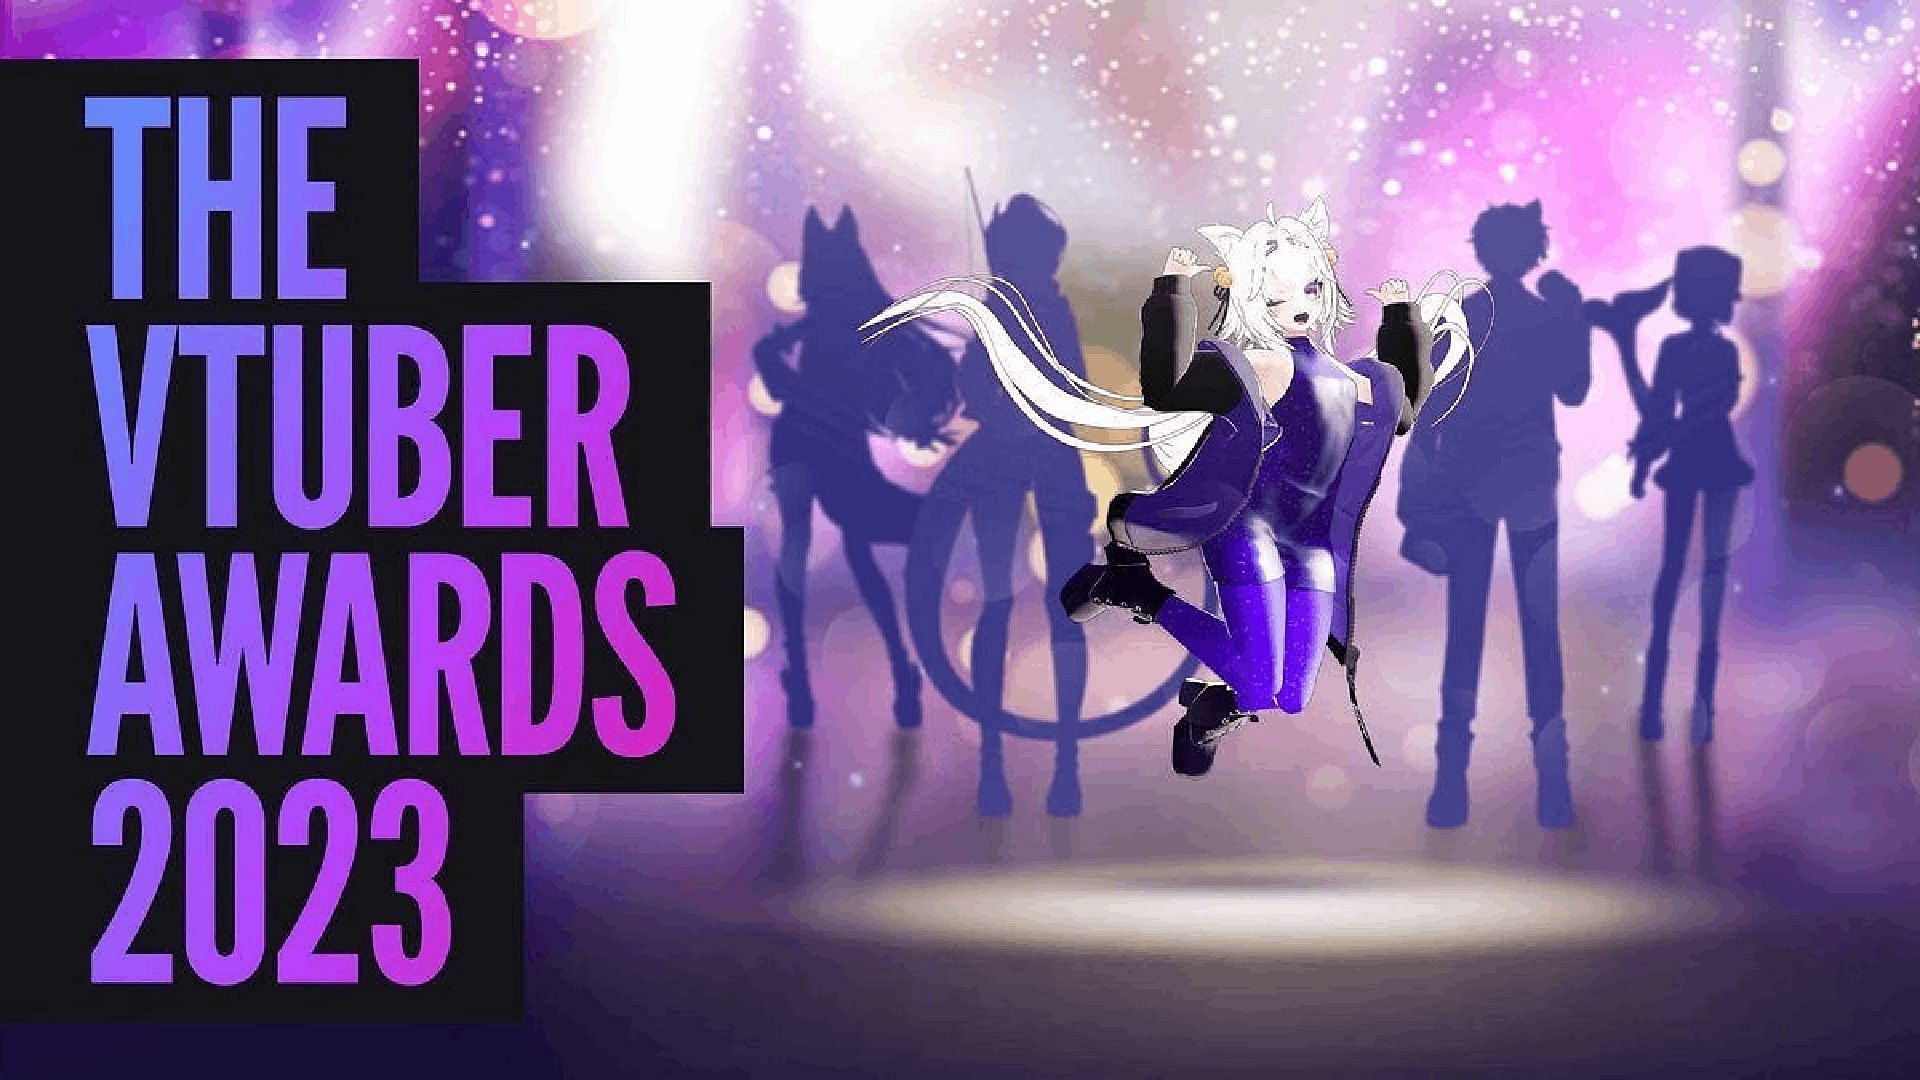 The VTuber Awards is the sole award show focusing primarily on VTubers (Image via thevtuberawards.com)